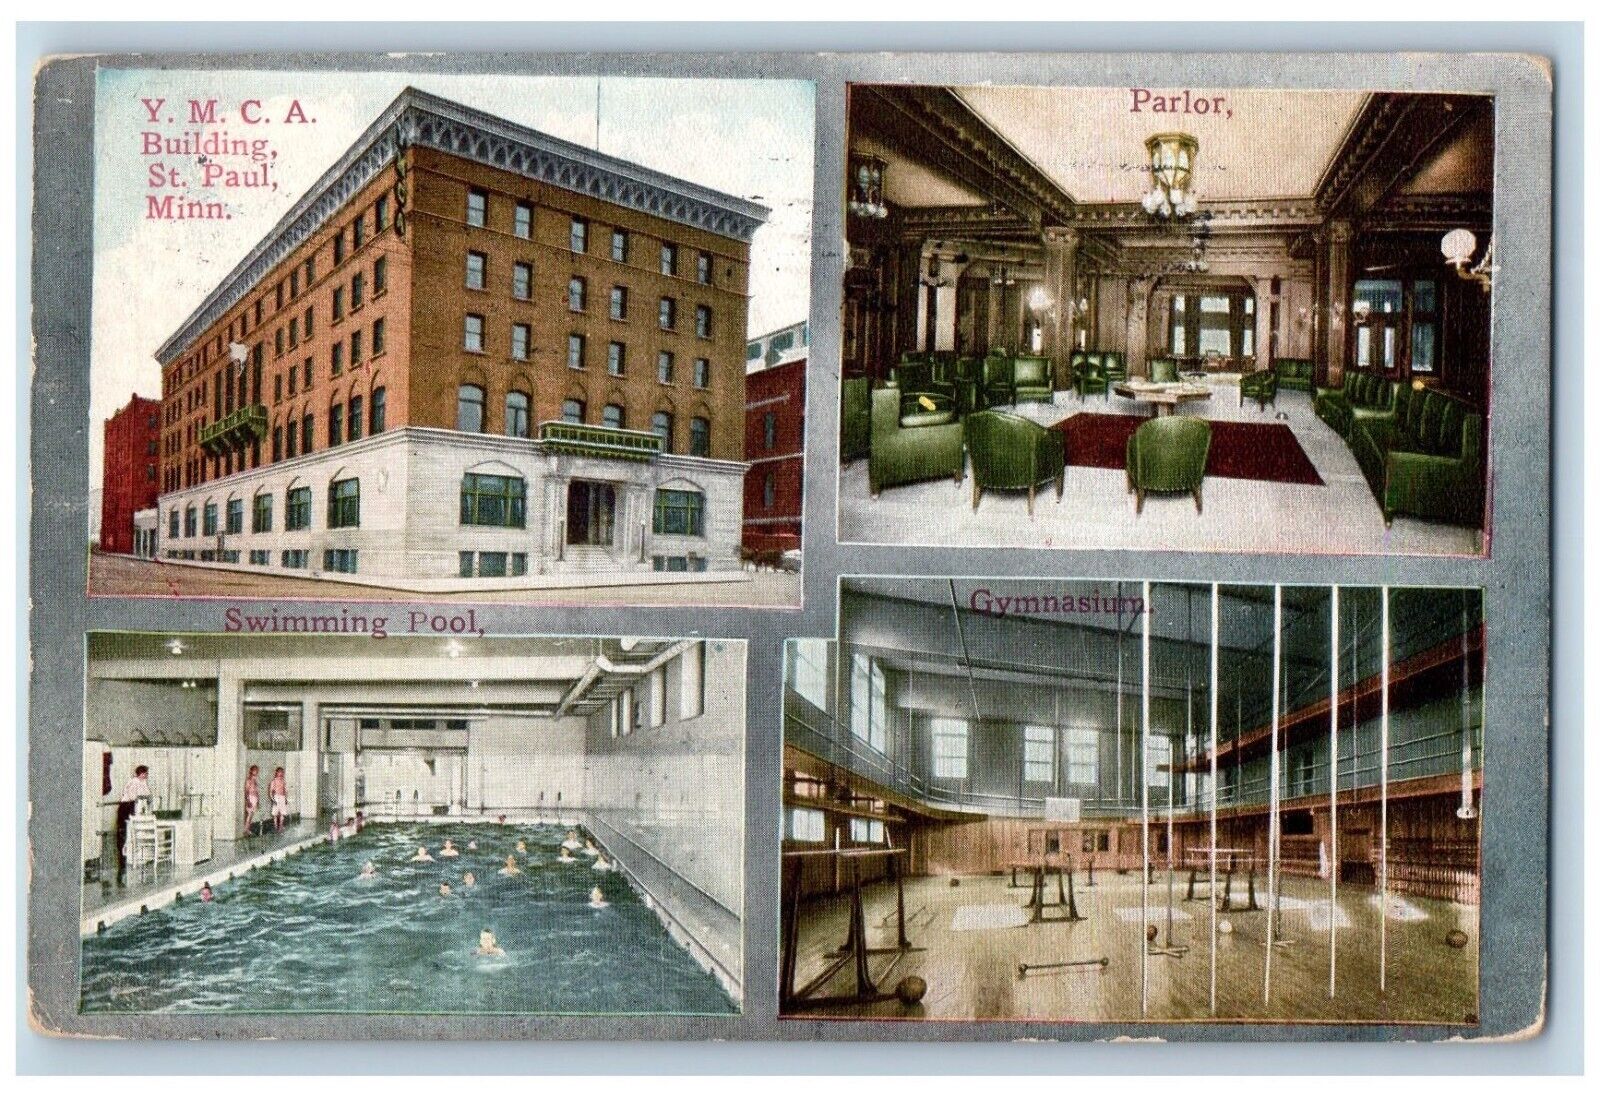 St. Paul Minnesota Postcard YMCA Building Parlor Swimming Pool Gymnasium c1914